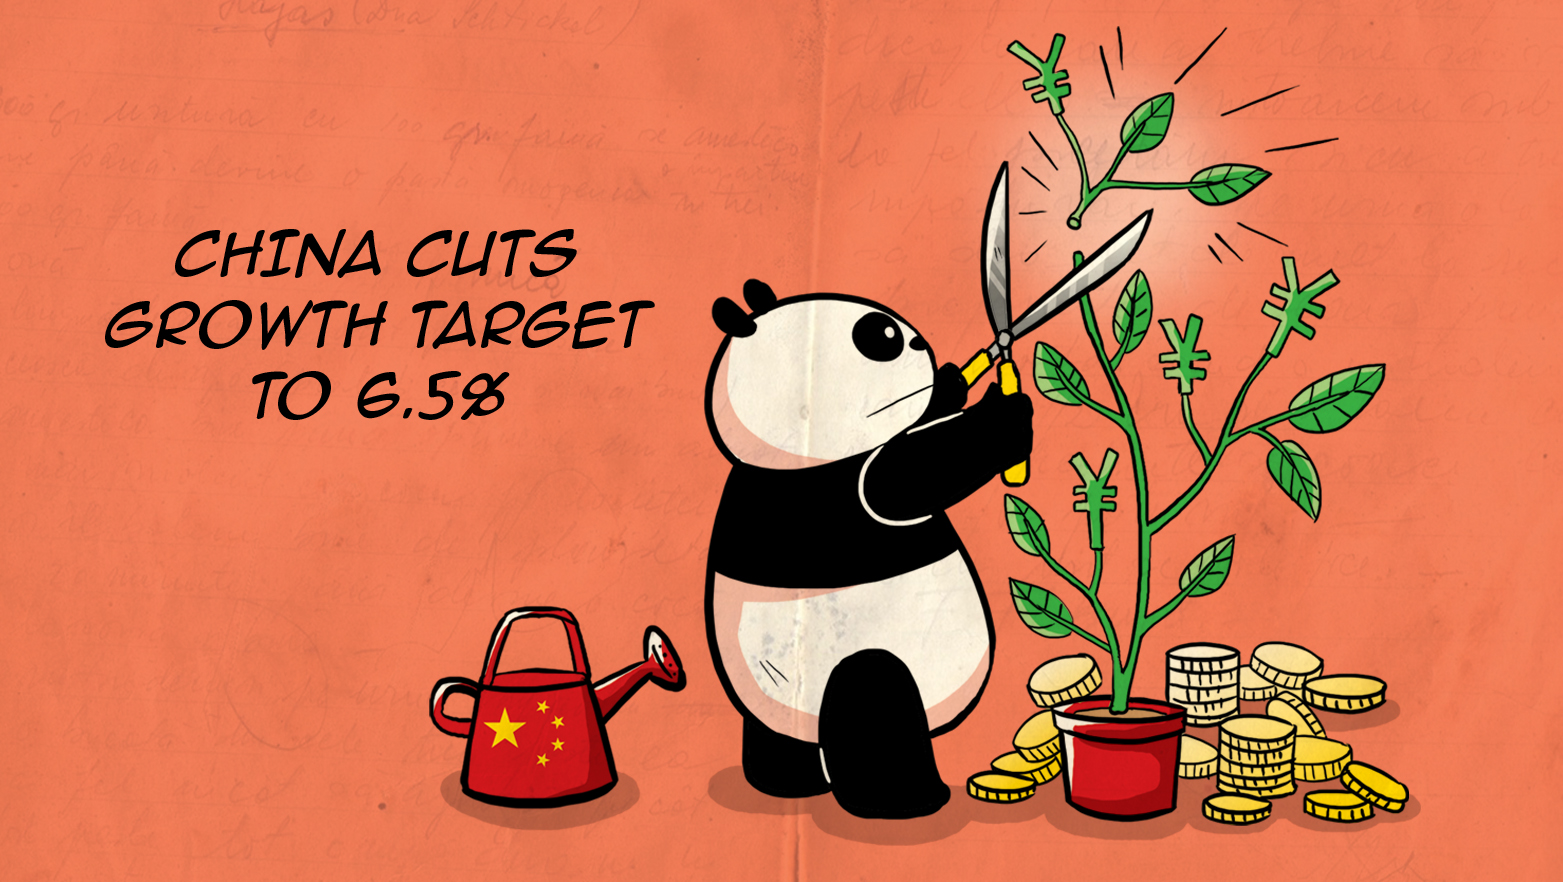 China cuts growth target